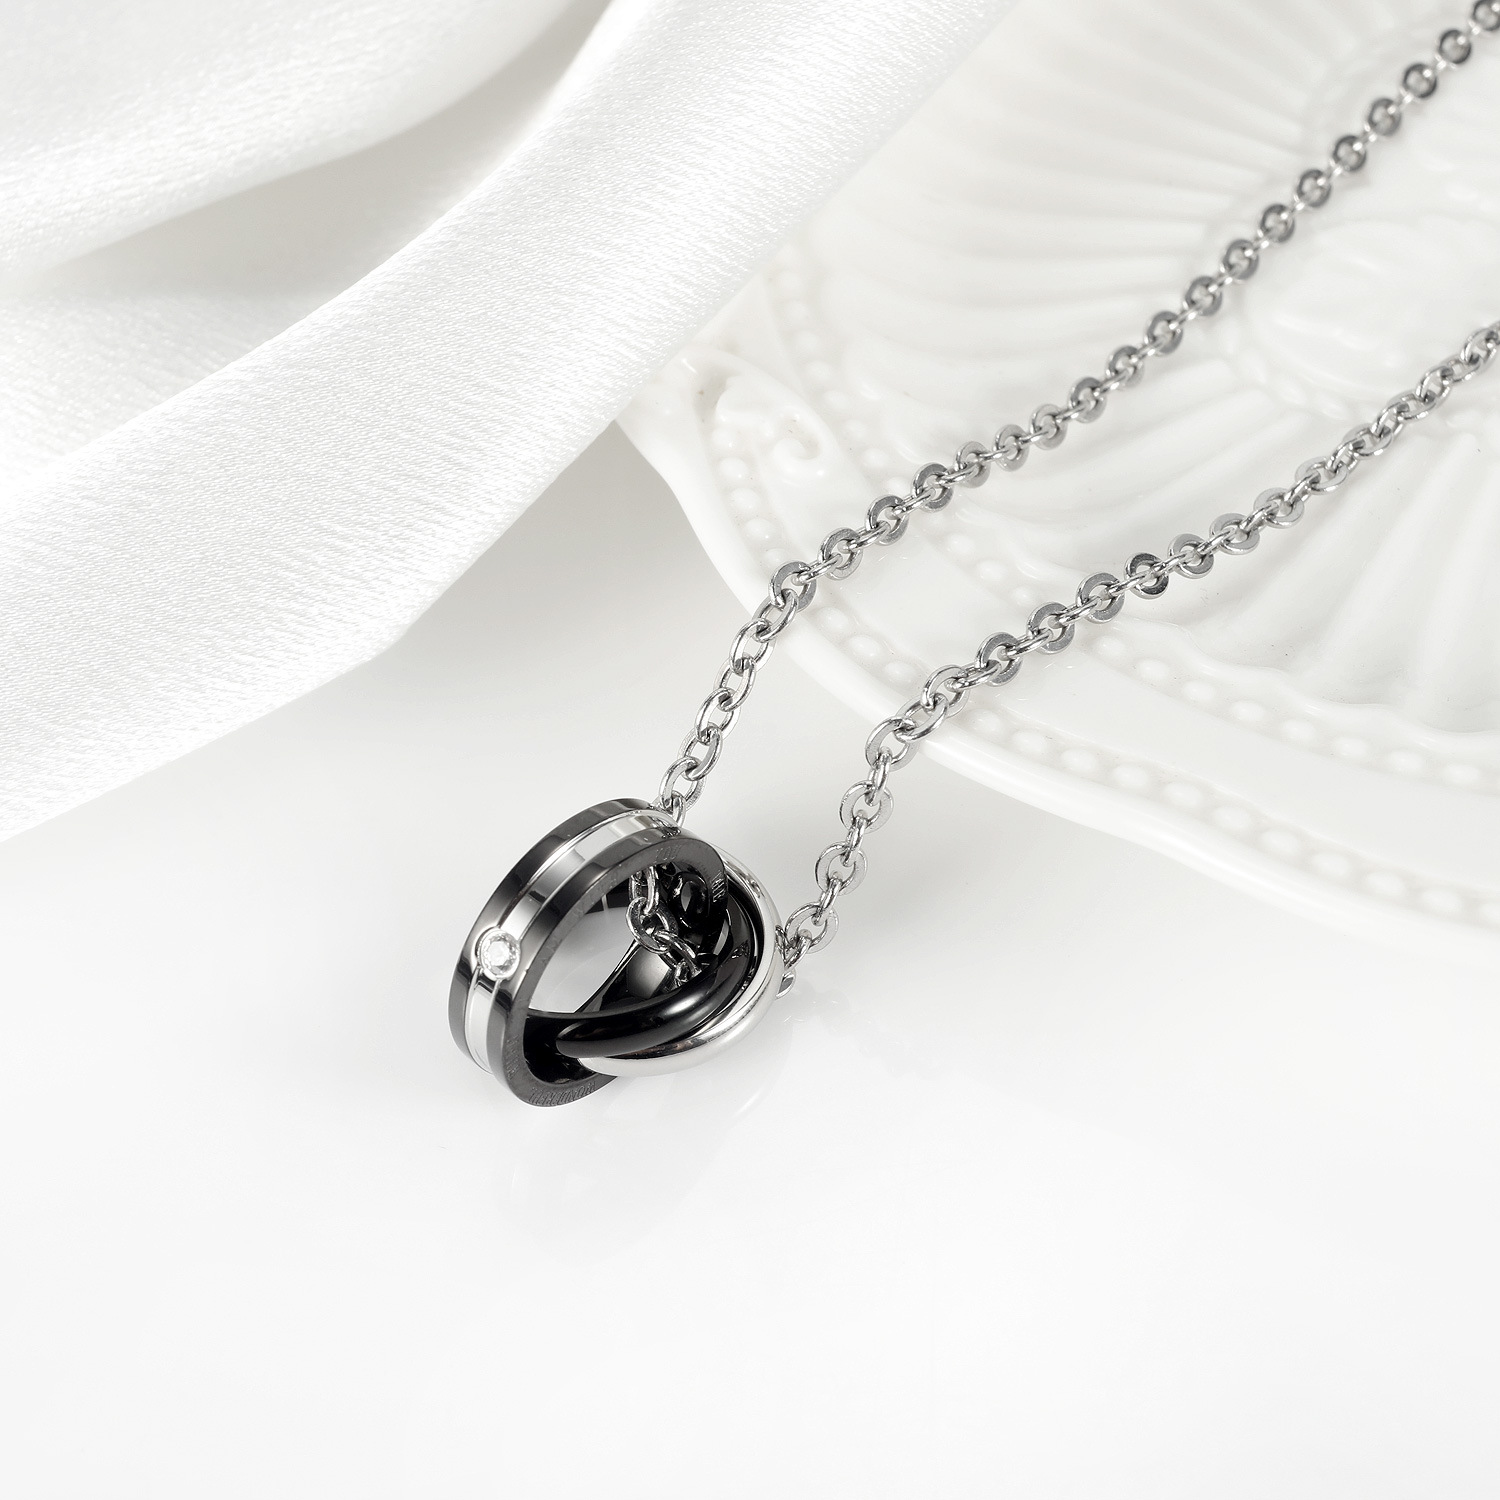 1:black pendant   chain